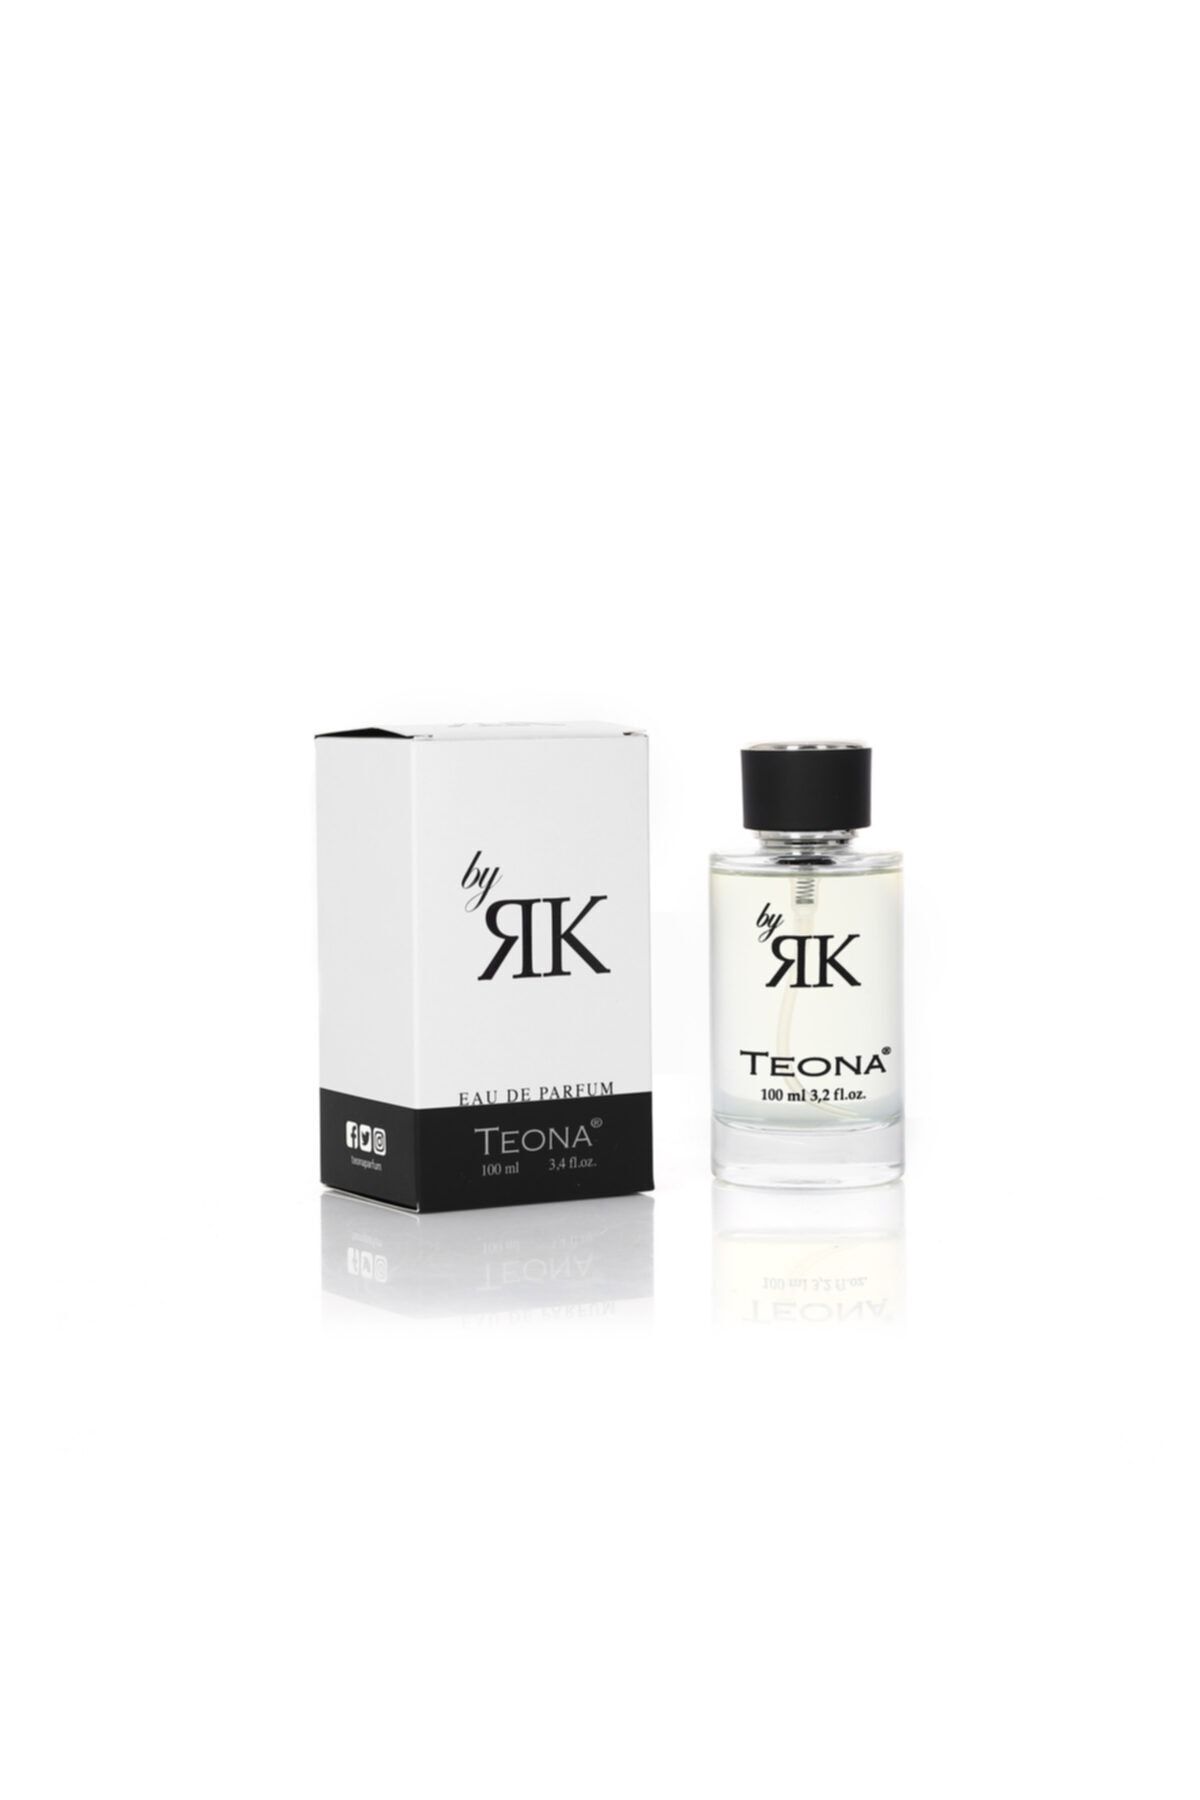 TEONA By Rk 100 Ml Kreasyon Erkek Parfüm